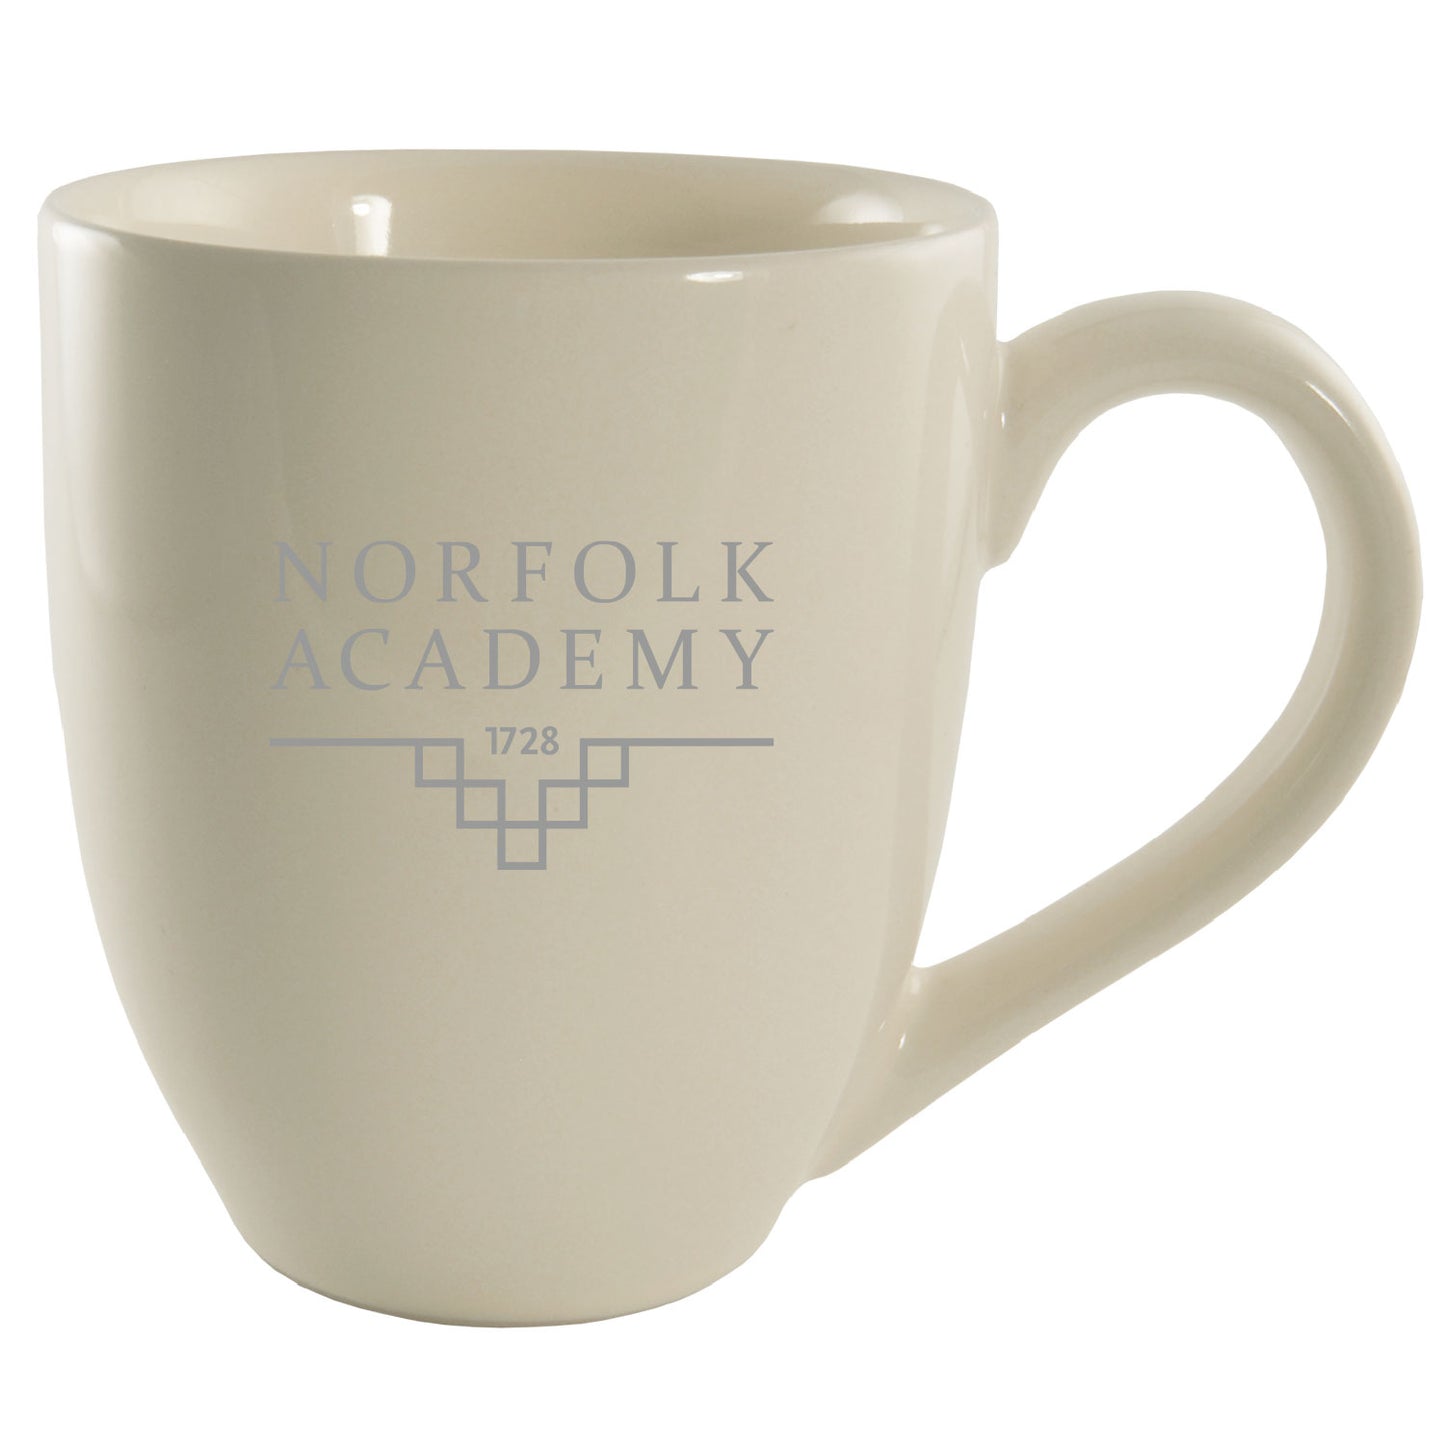 Norfolk Academy Bistro Mug - 4 Styles